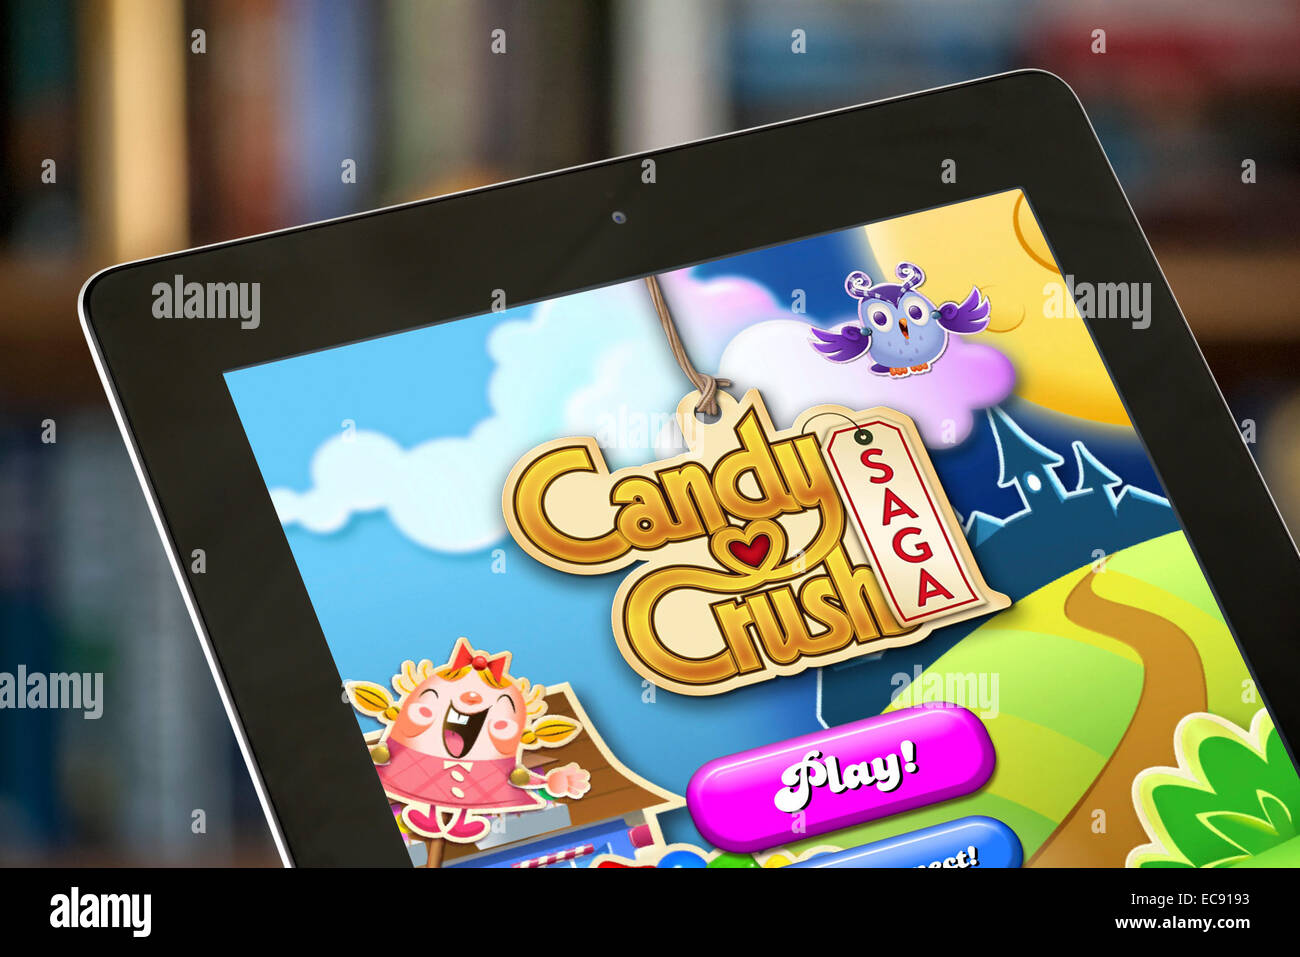 The popular game, Candy Crush Saga, played on an Apple iPad Stock Photo